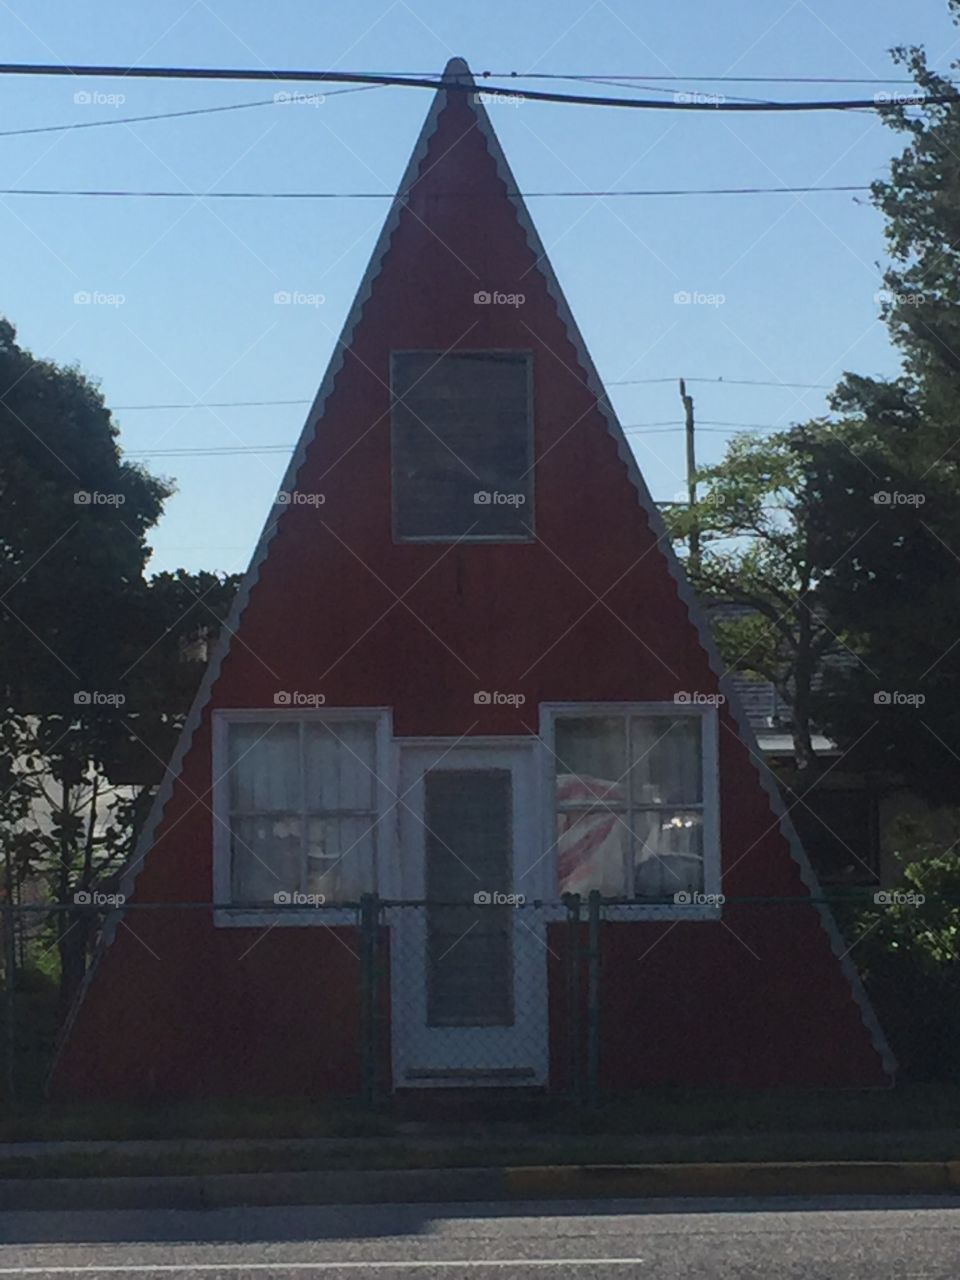 Triangular house